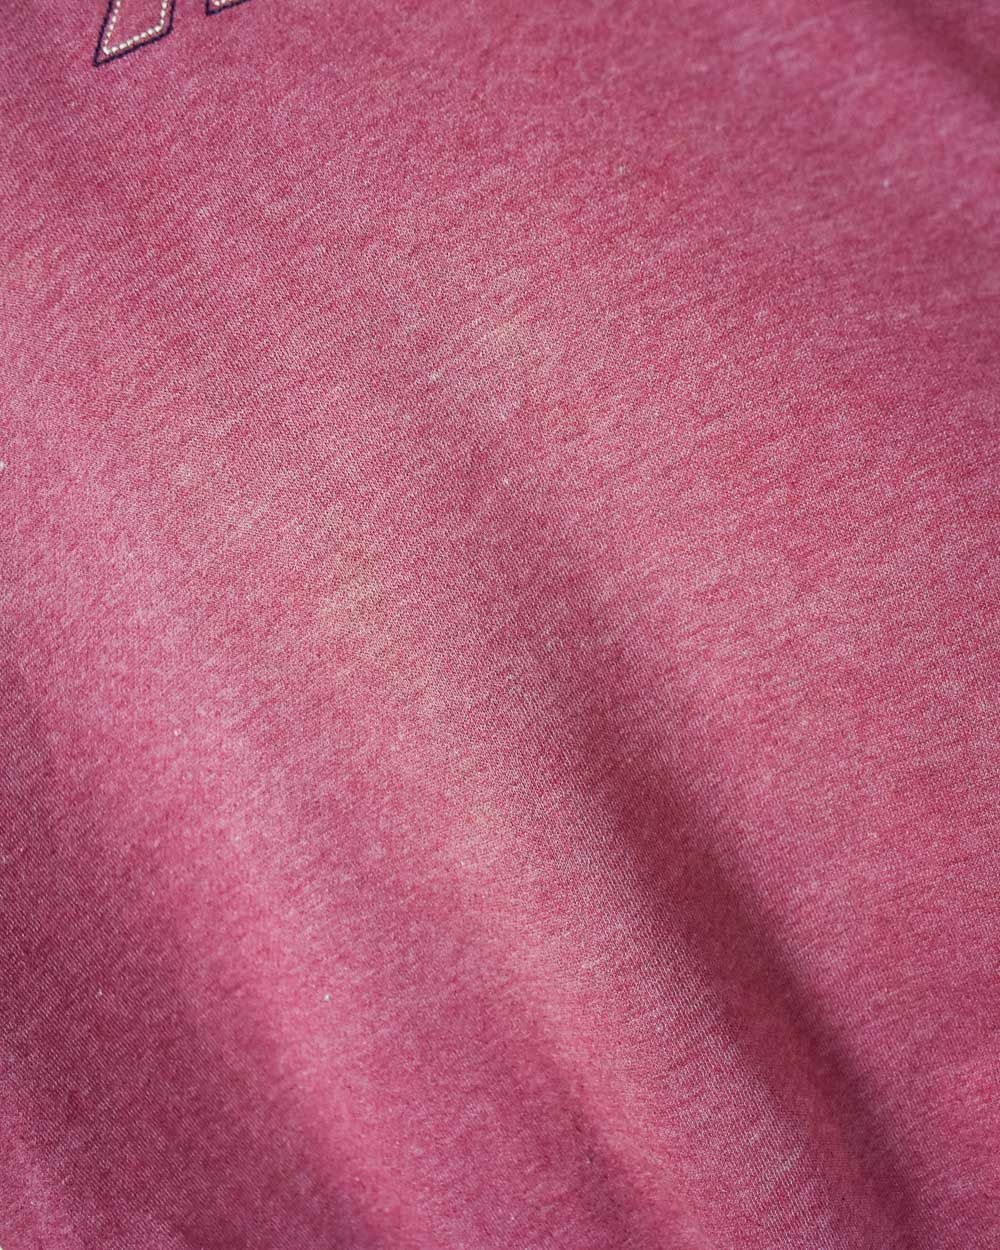 Pink Reebok Sweatshirt - Medium